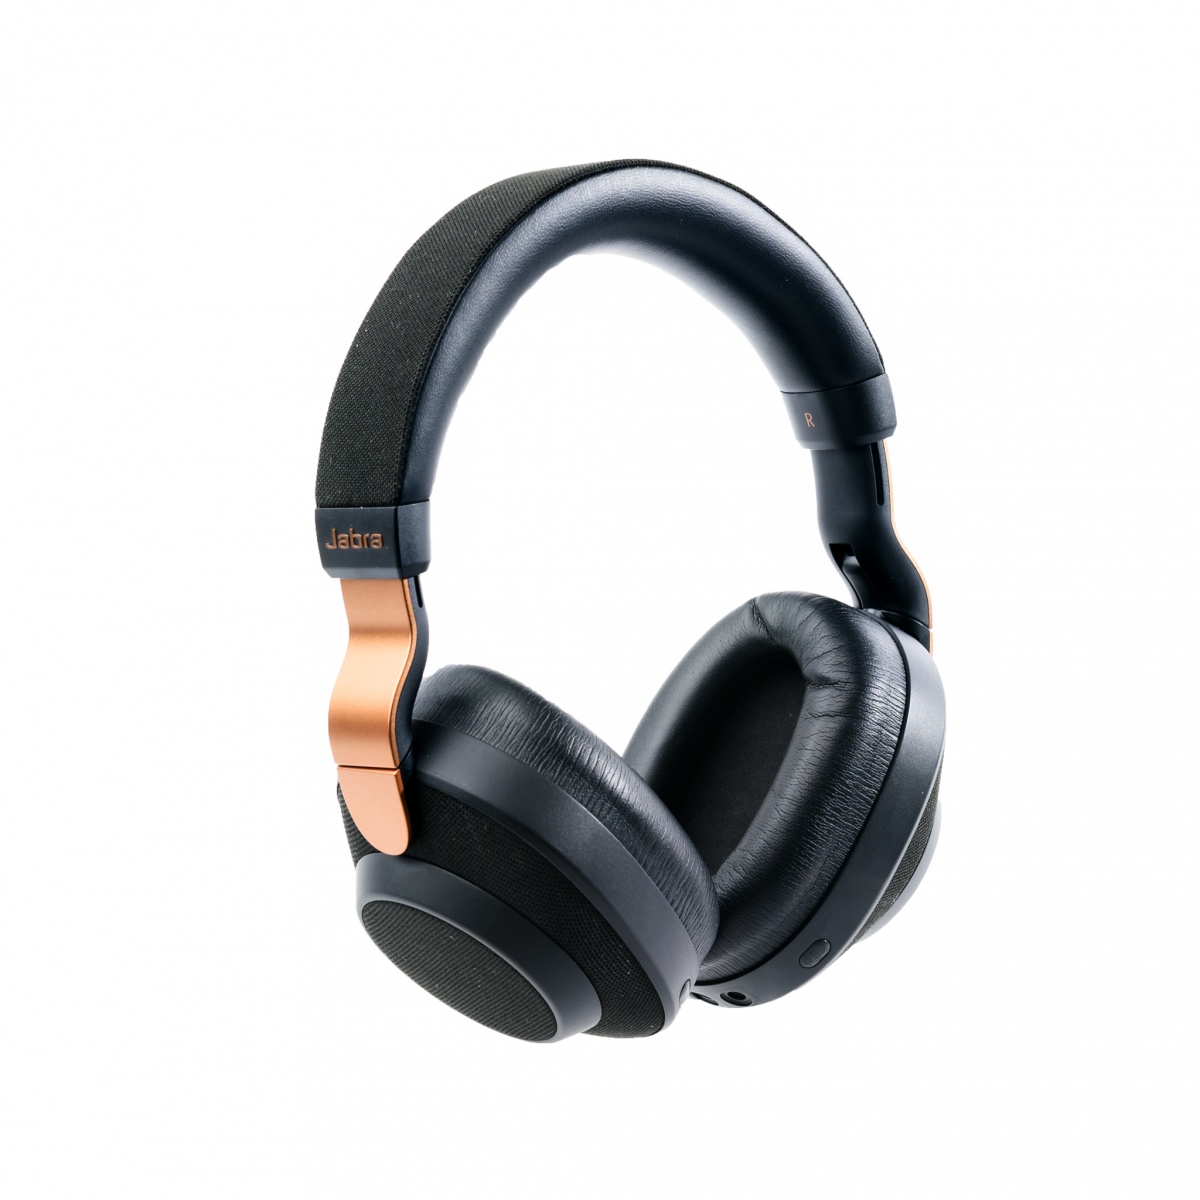 jabra elite 85h wireless headphone review